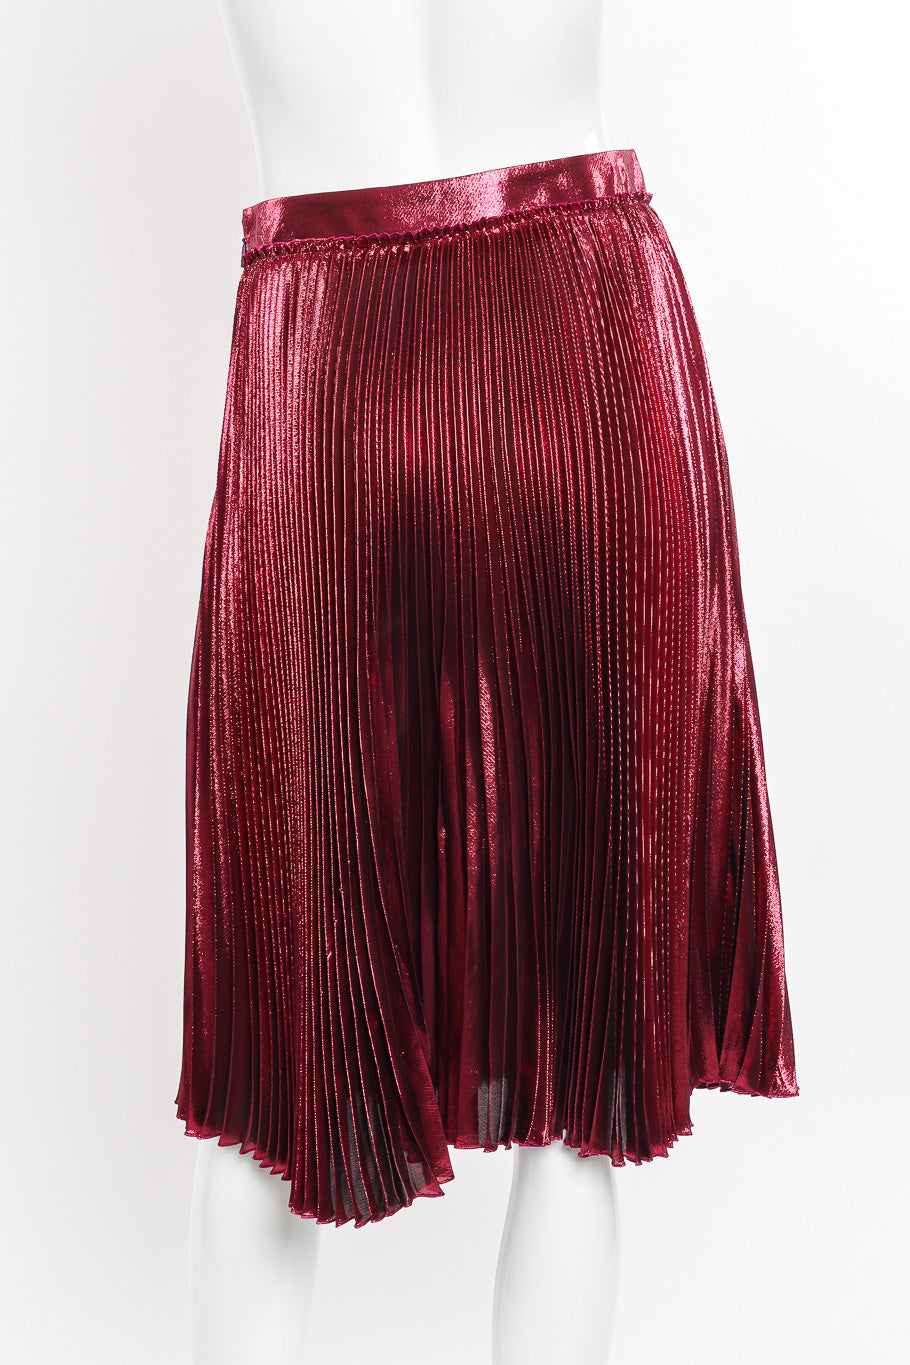 Gucci Metallic Accordion Pleat Skirt back view on mannequin @Recessla